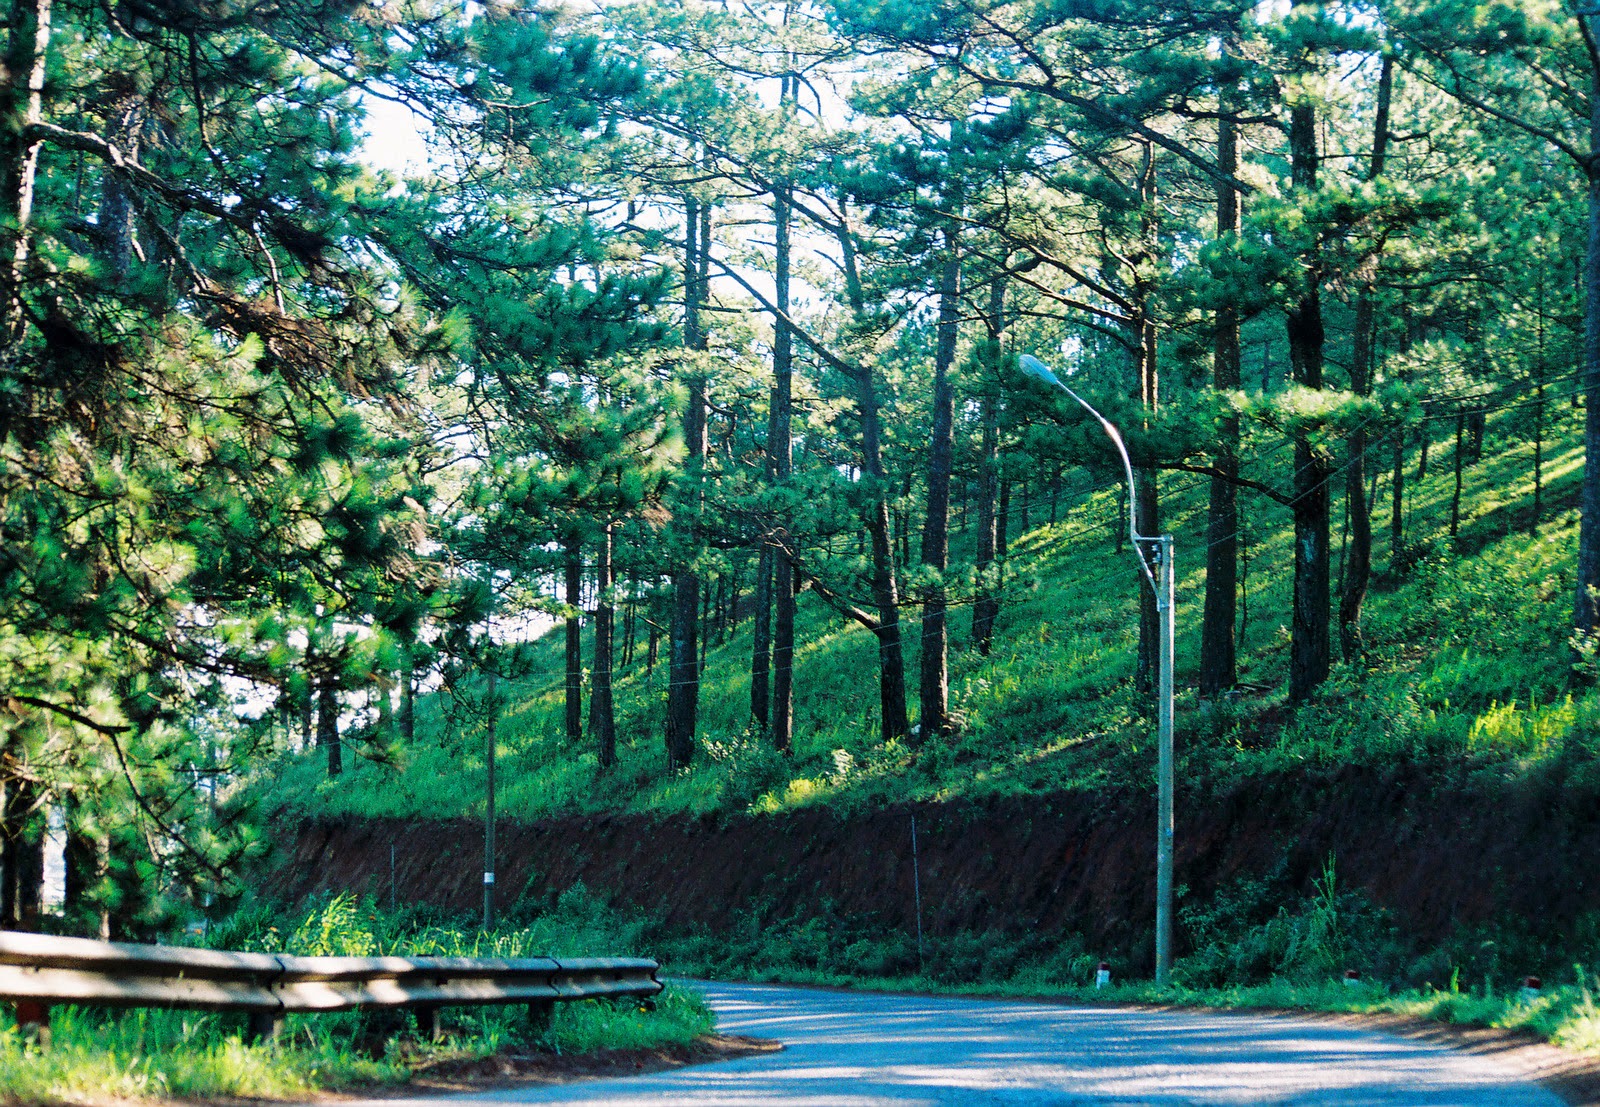 Dalat - City of thousands of pine trees